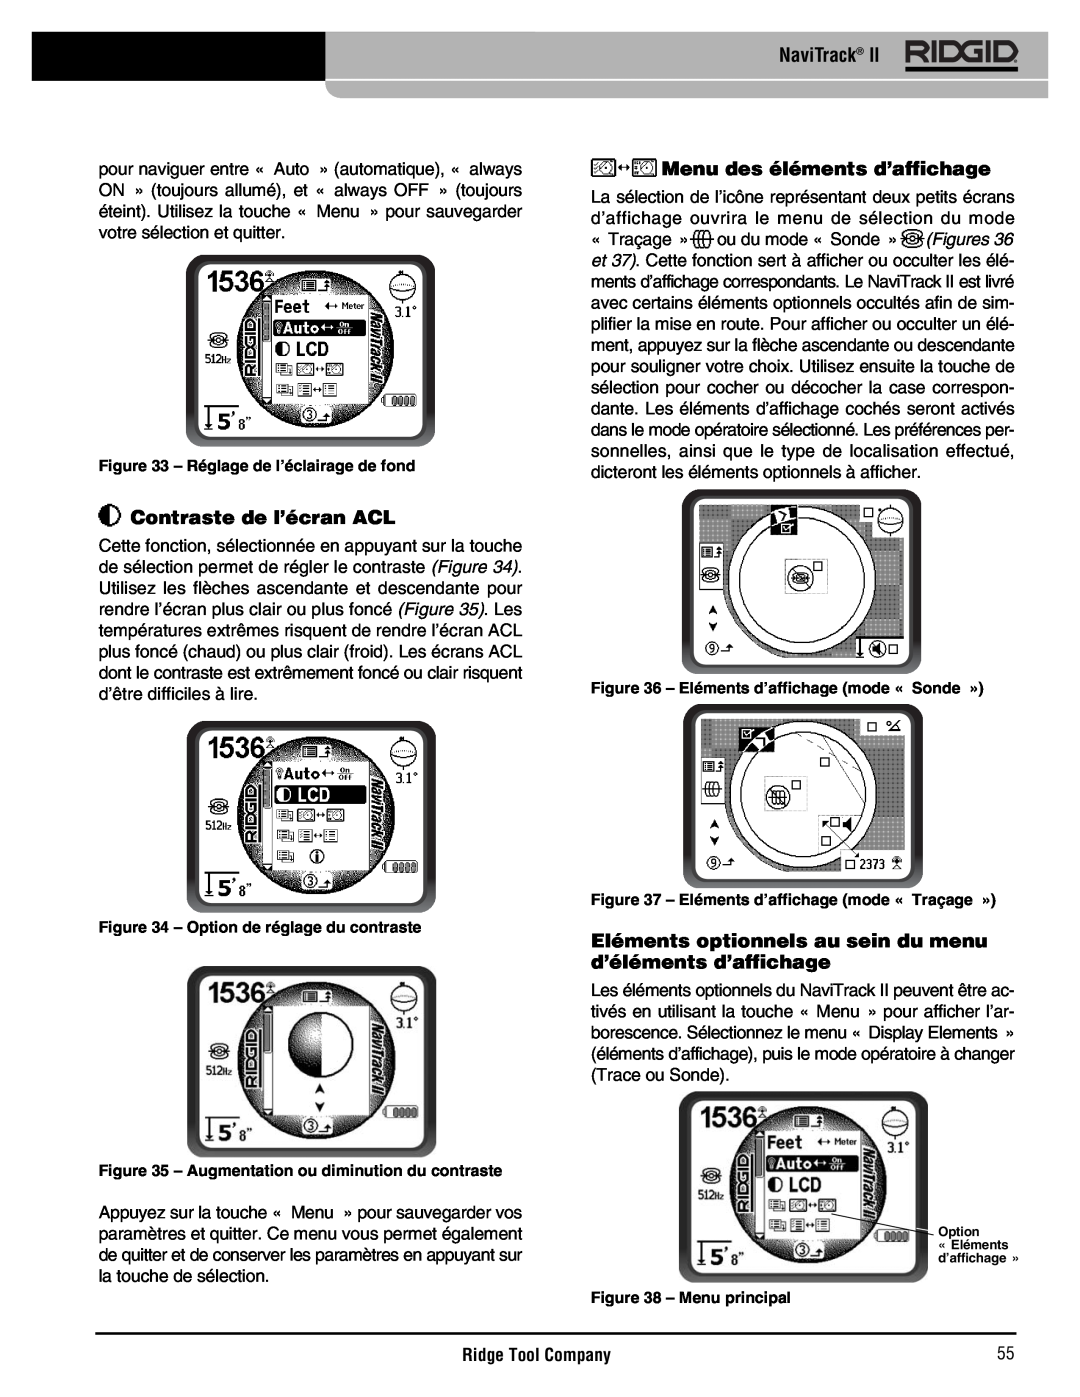 RIDGID Metal Detector manual Contraste de l’écran ACL, Menu des éléments d’affichage, NaviTrack, Ridge Tool Company 